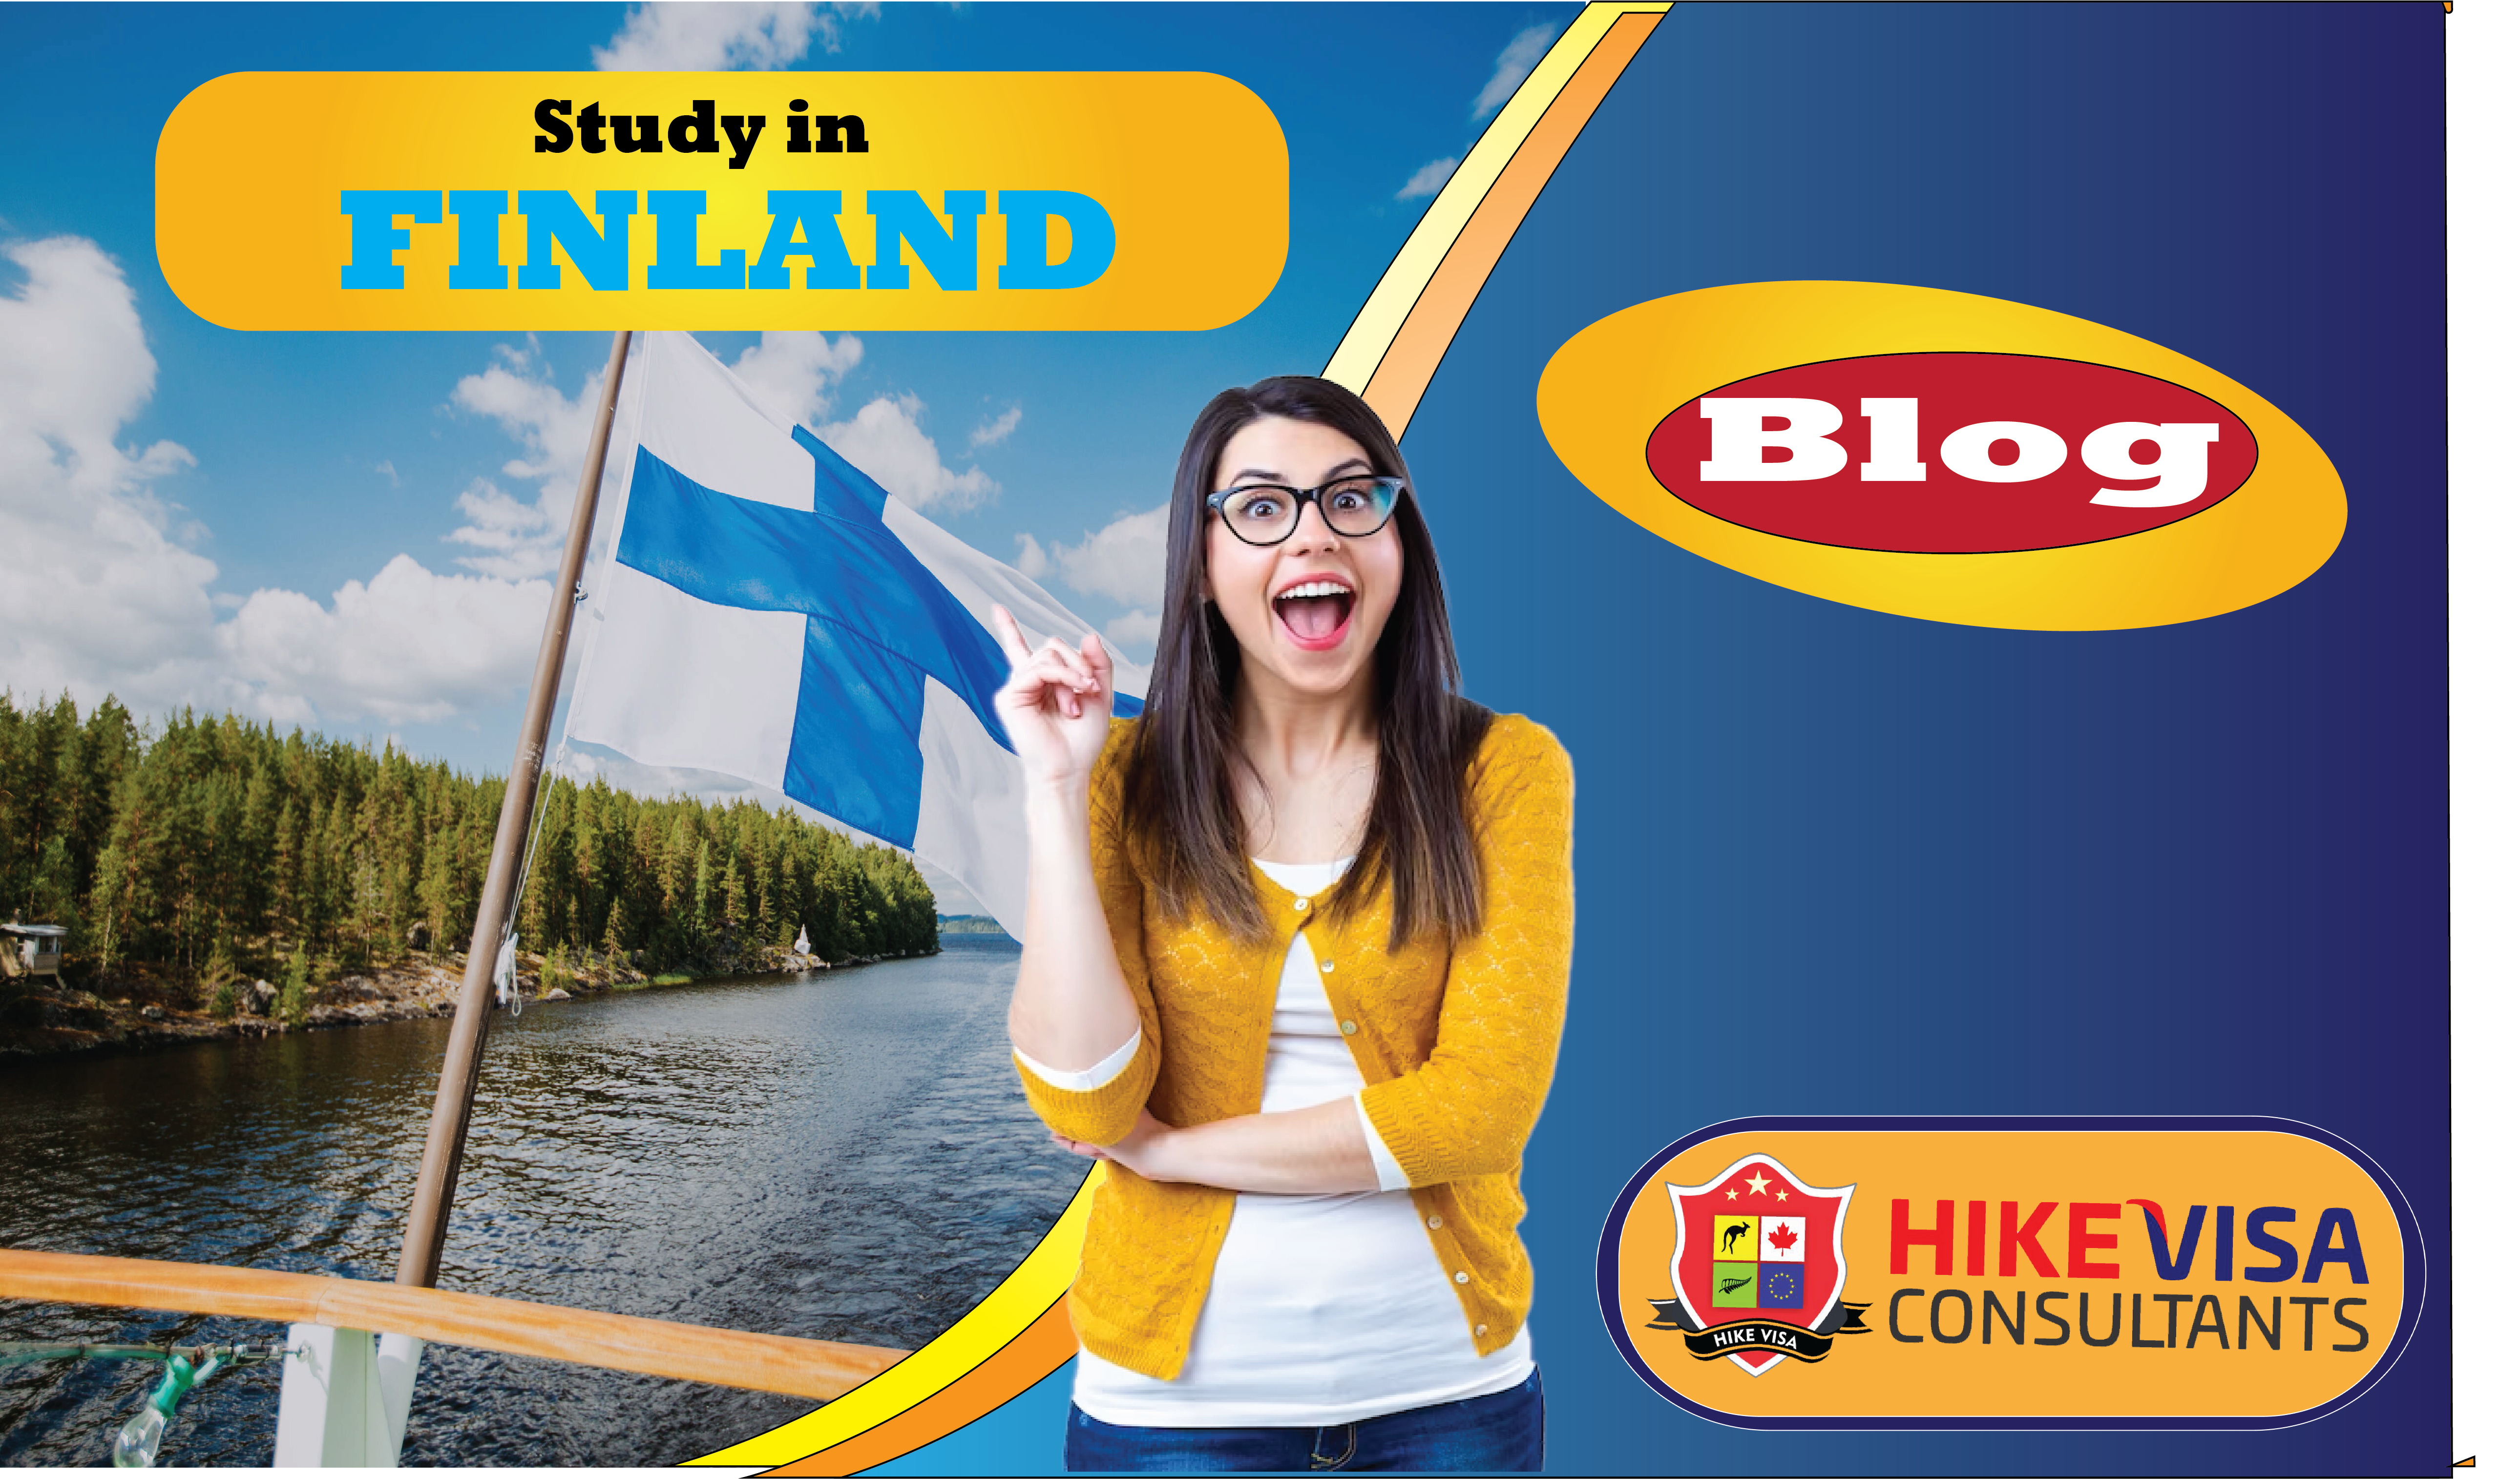 Blog about Finland study visa